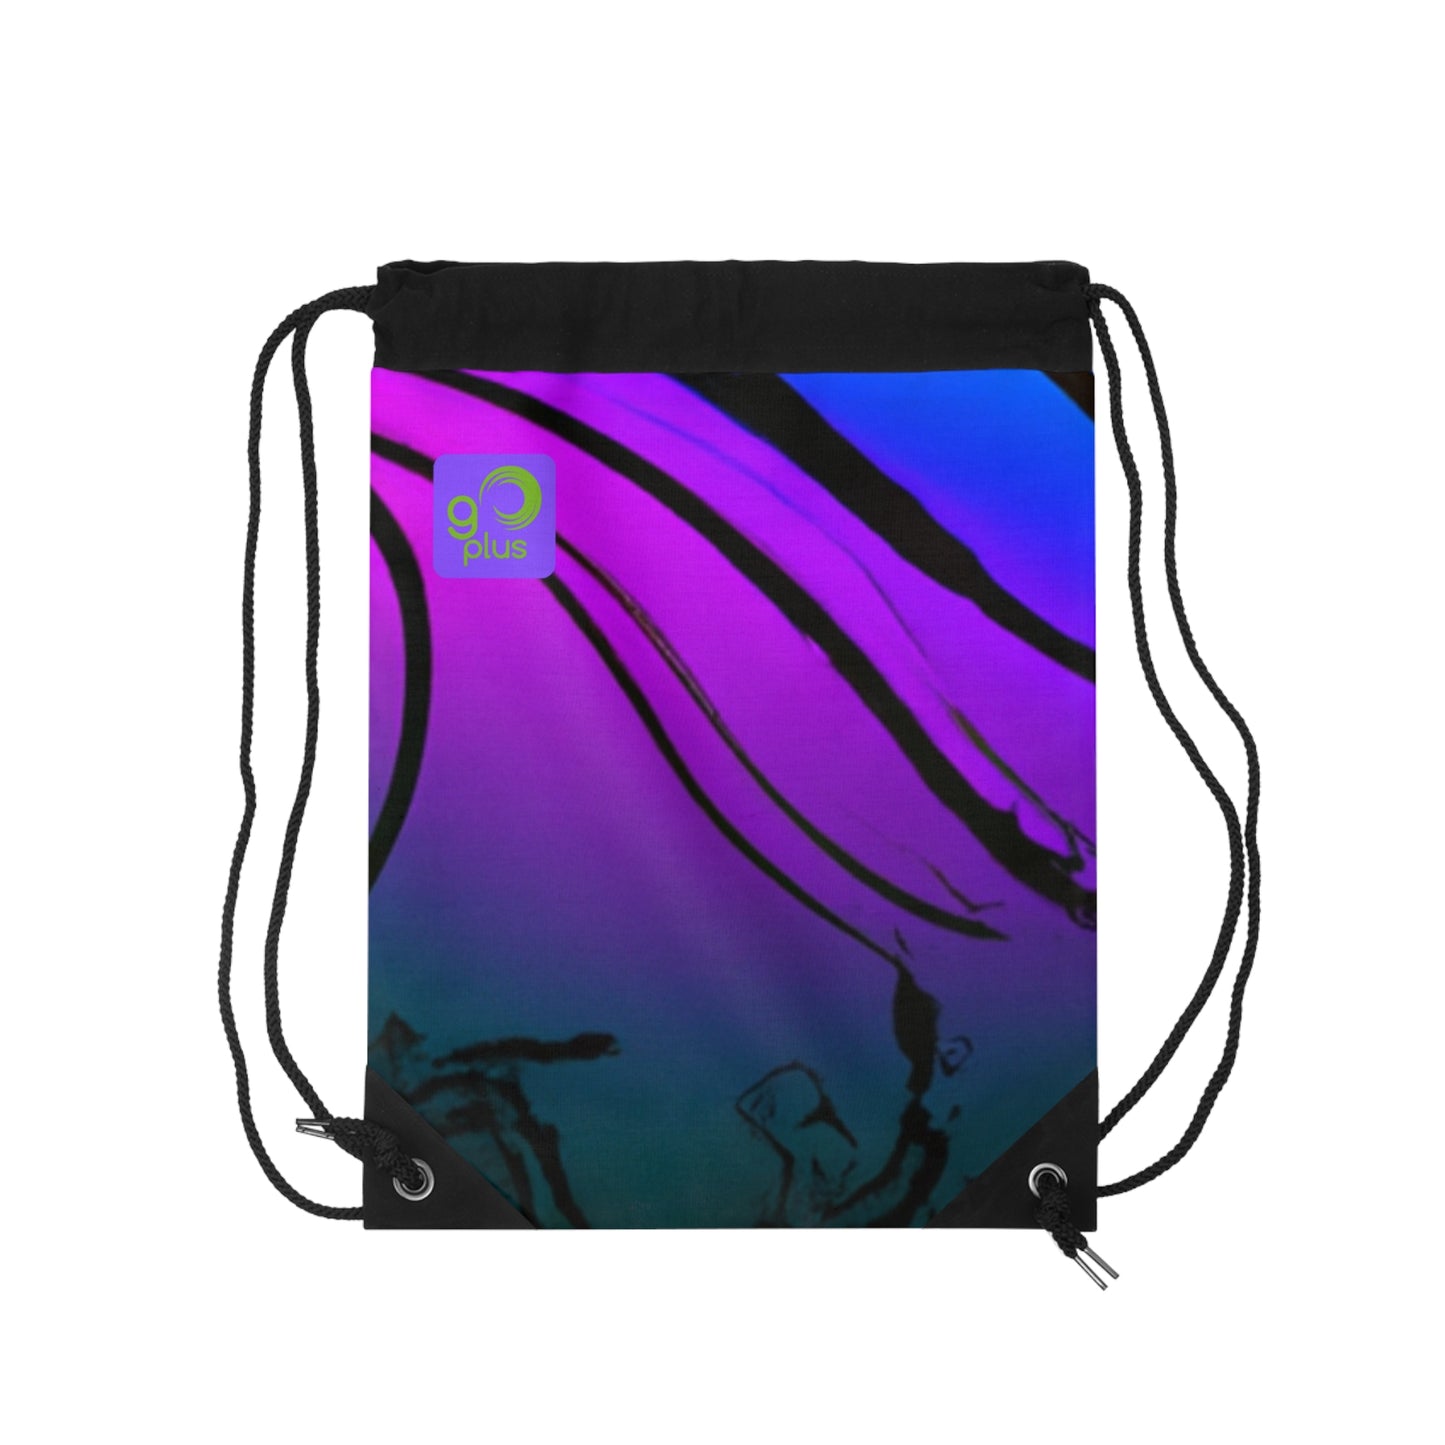 "The Dynamic Fan: Exquisite Art Showcasing Your Fandom" - Go Plus Drawstring Bag